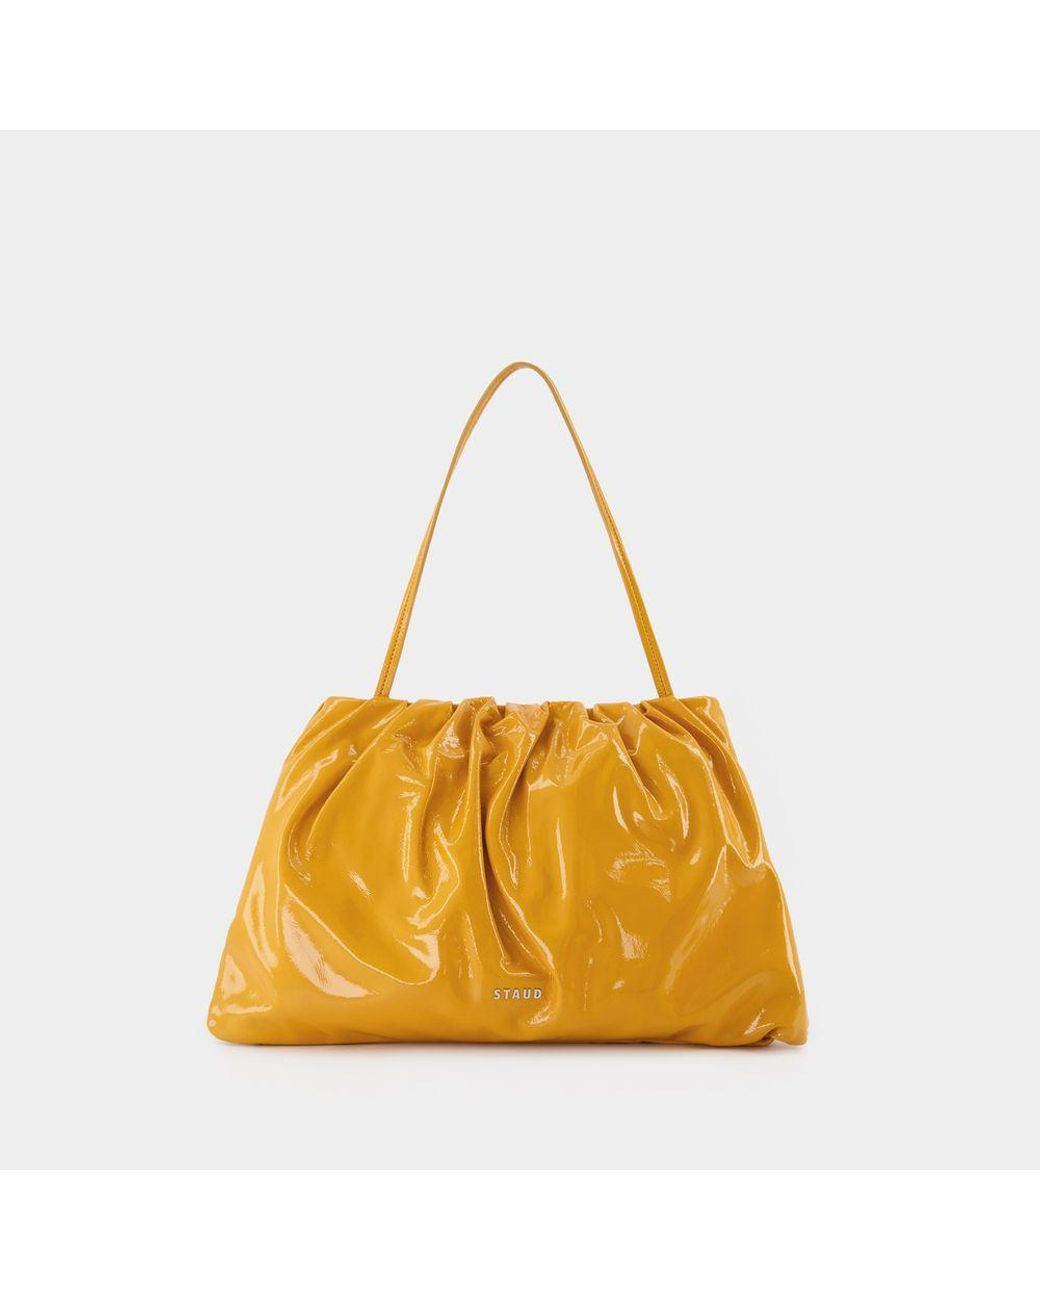 Michael Kors Phoebe White Leather Bucket Bag Authentic NWT 